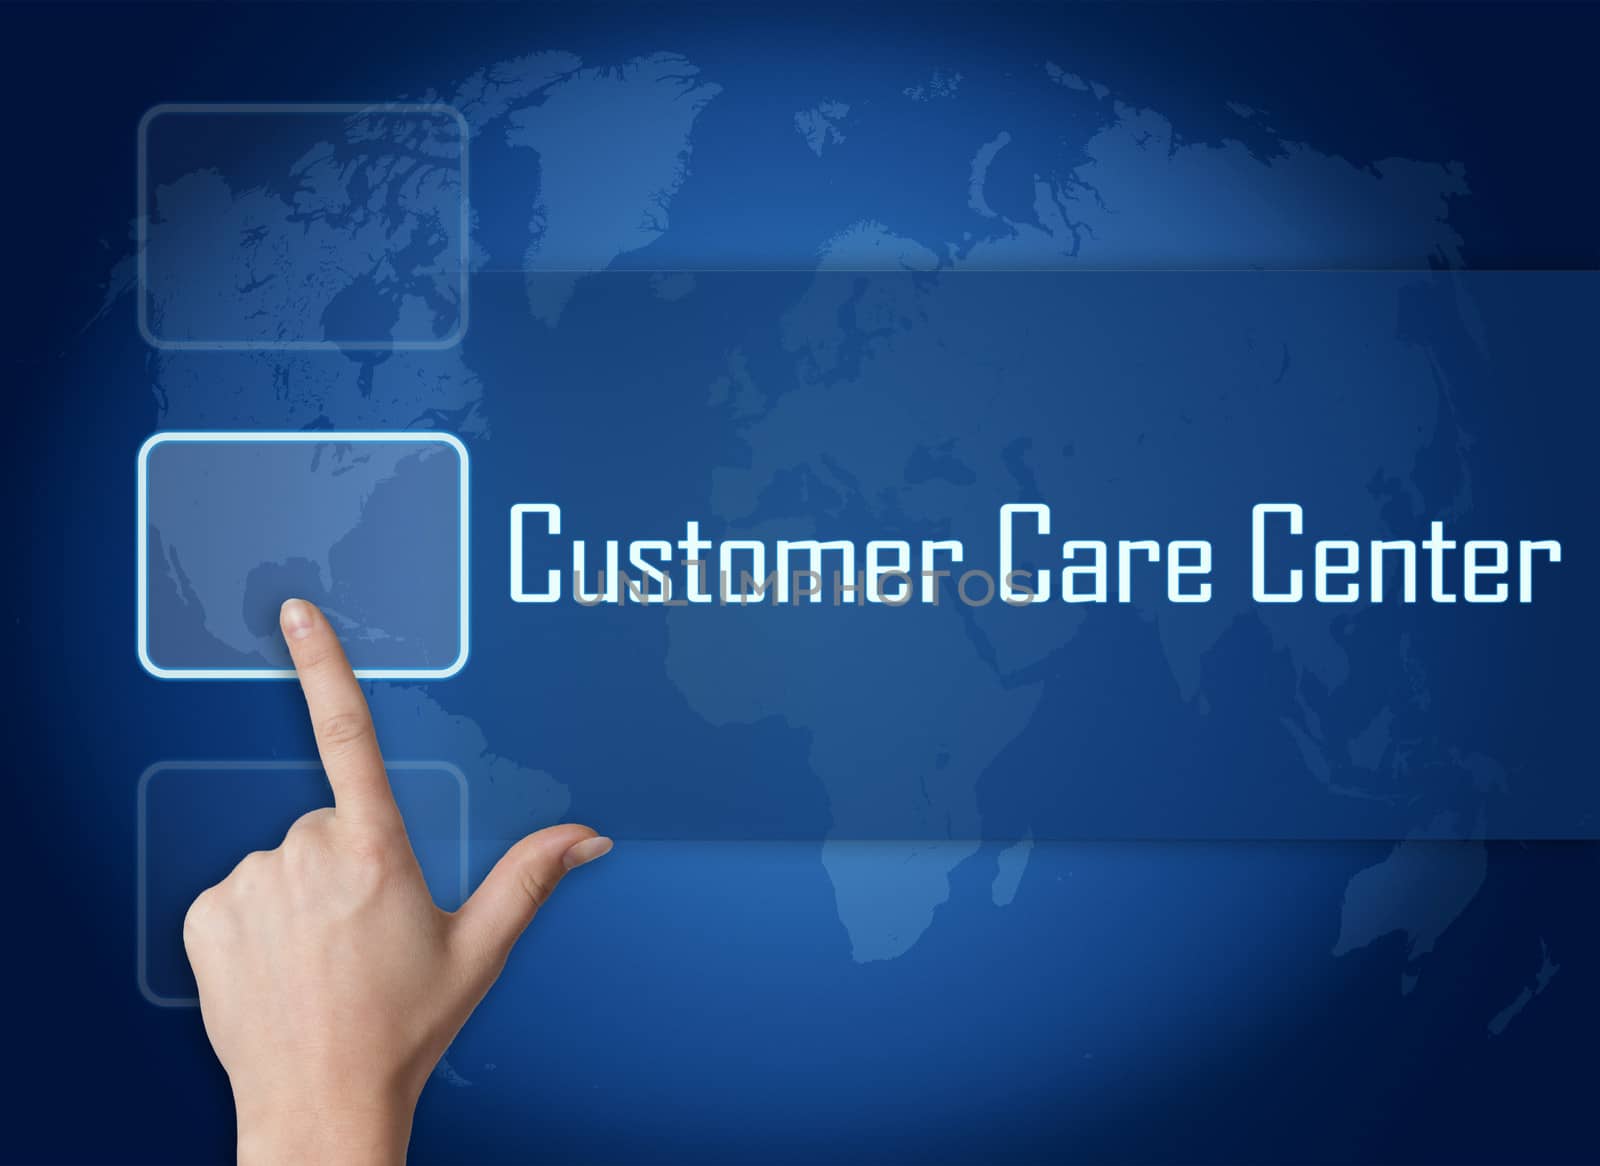 Customer Care Center by Mazirama